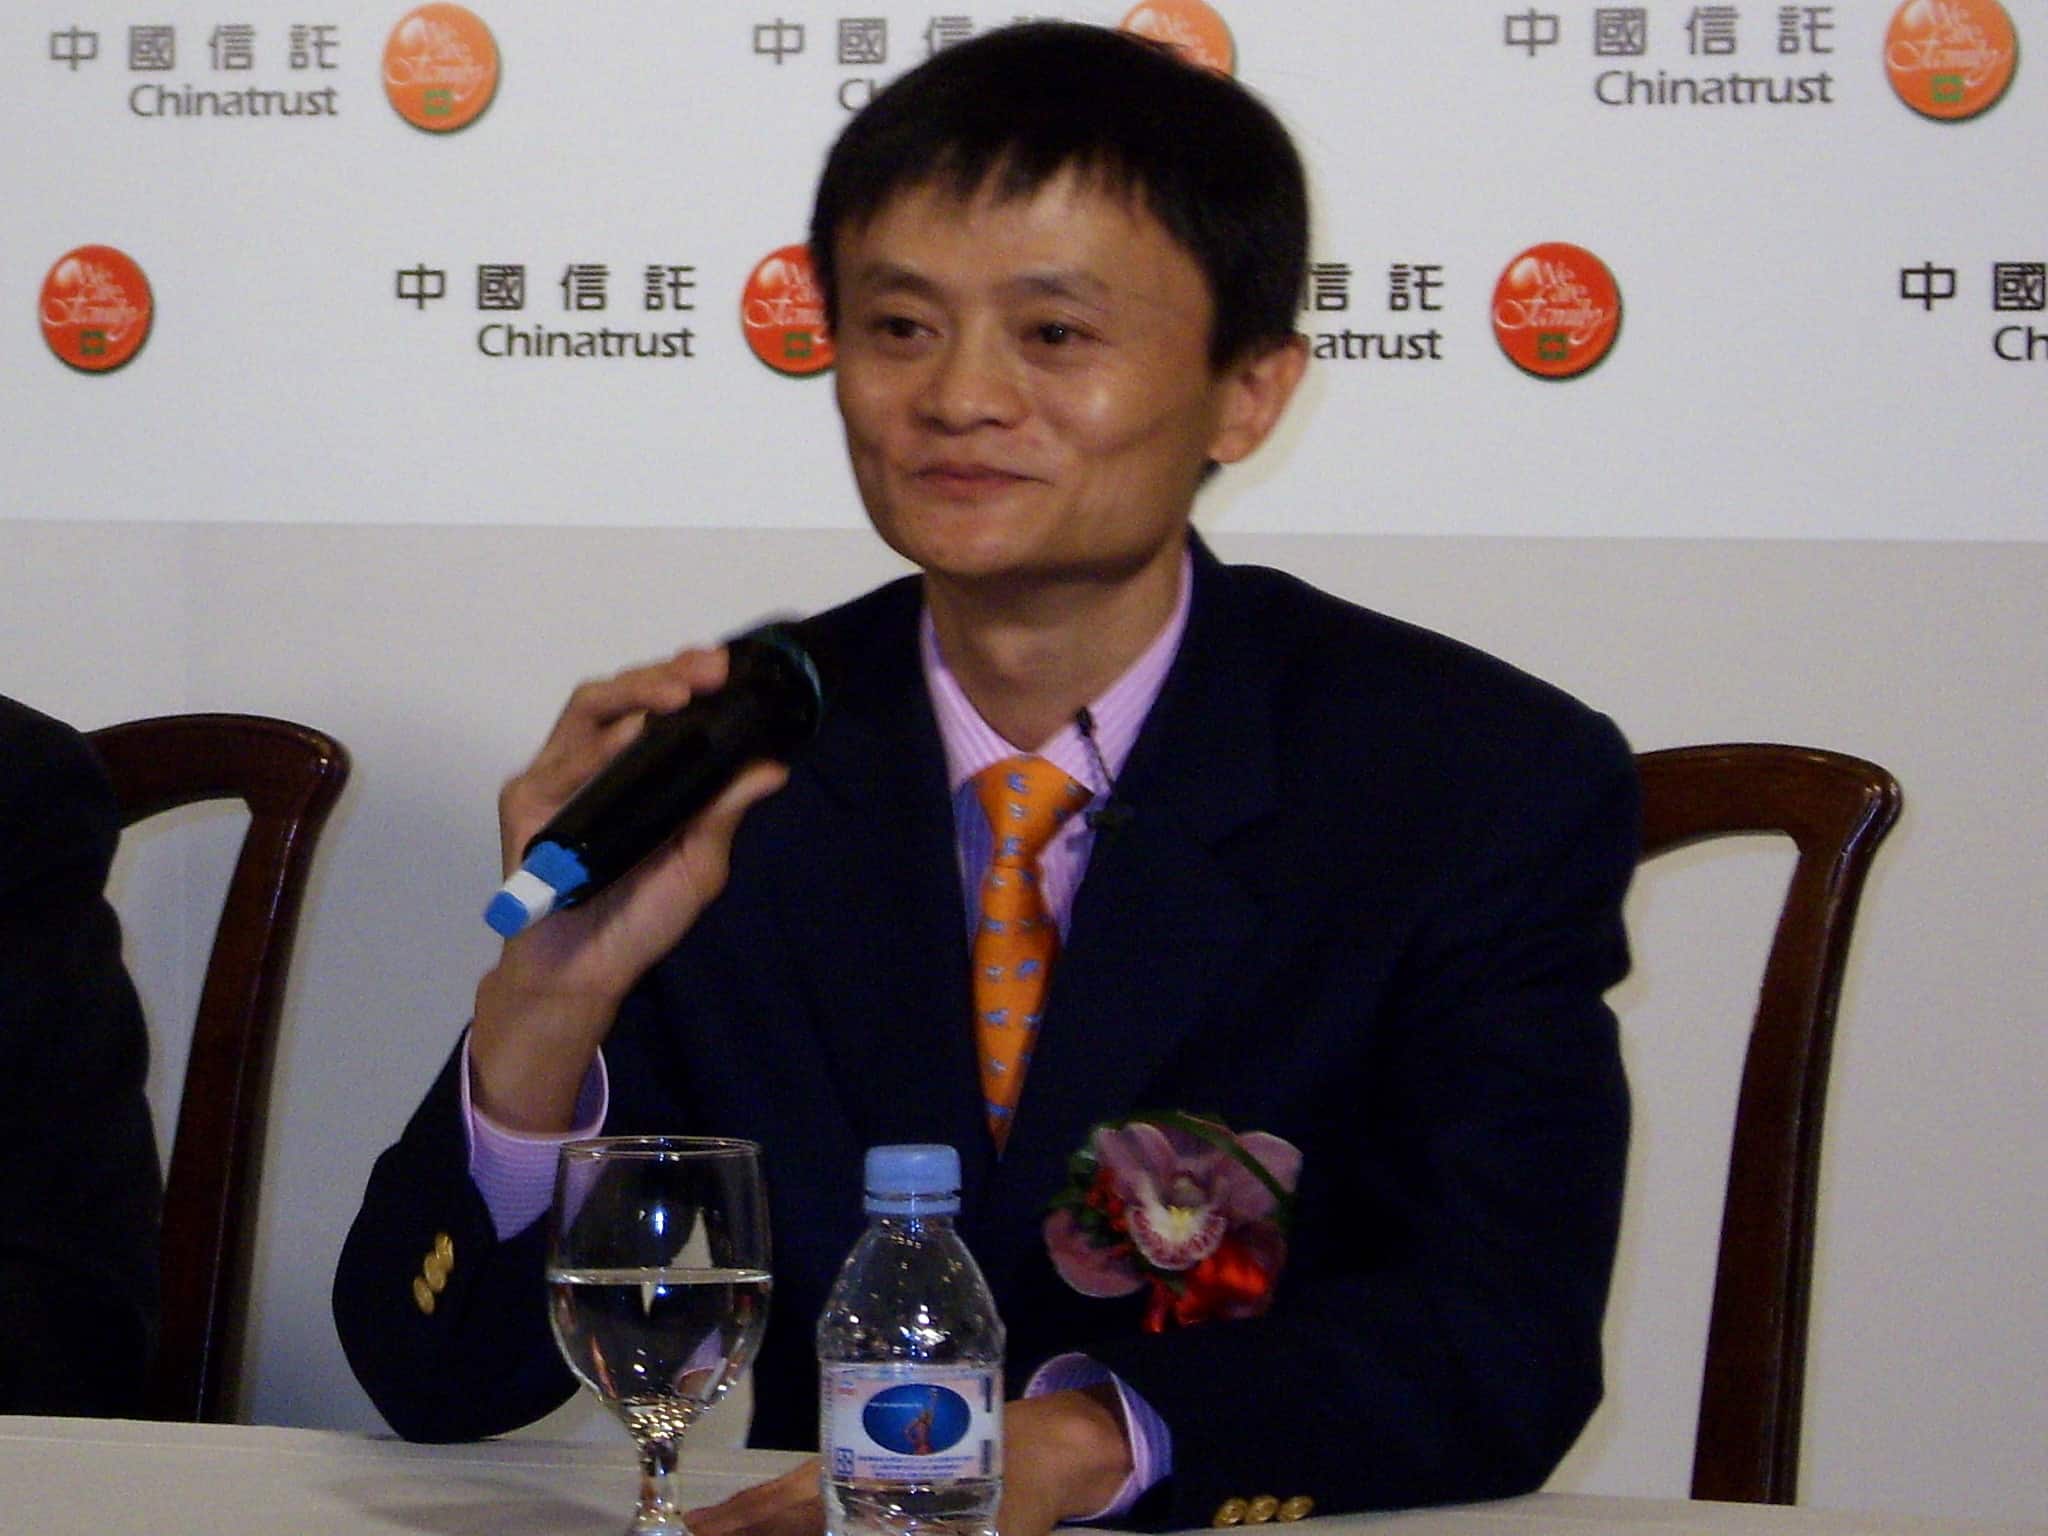 Jack Ma le co-fondateur d'Alibaba